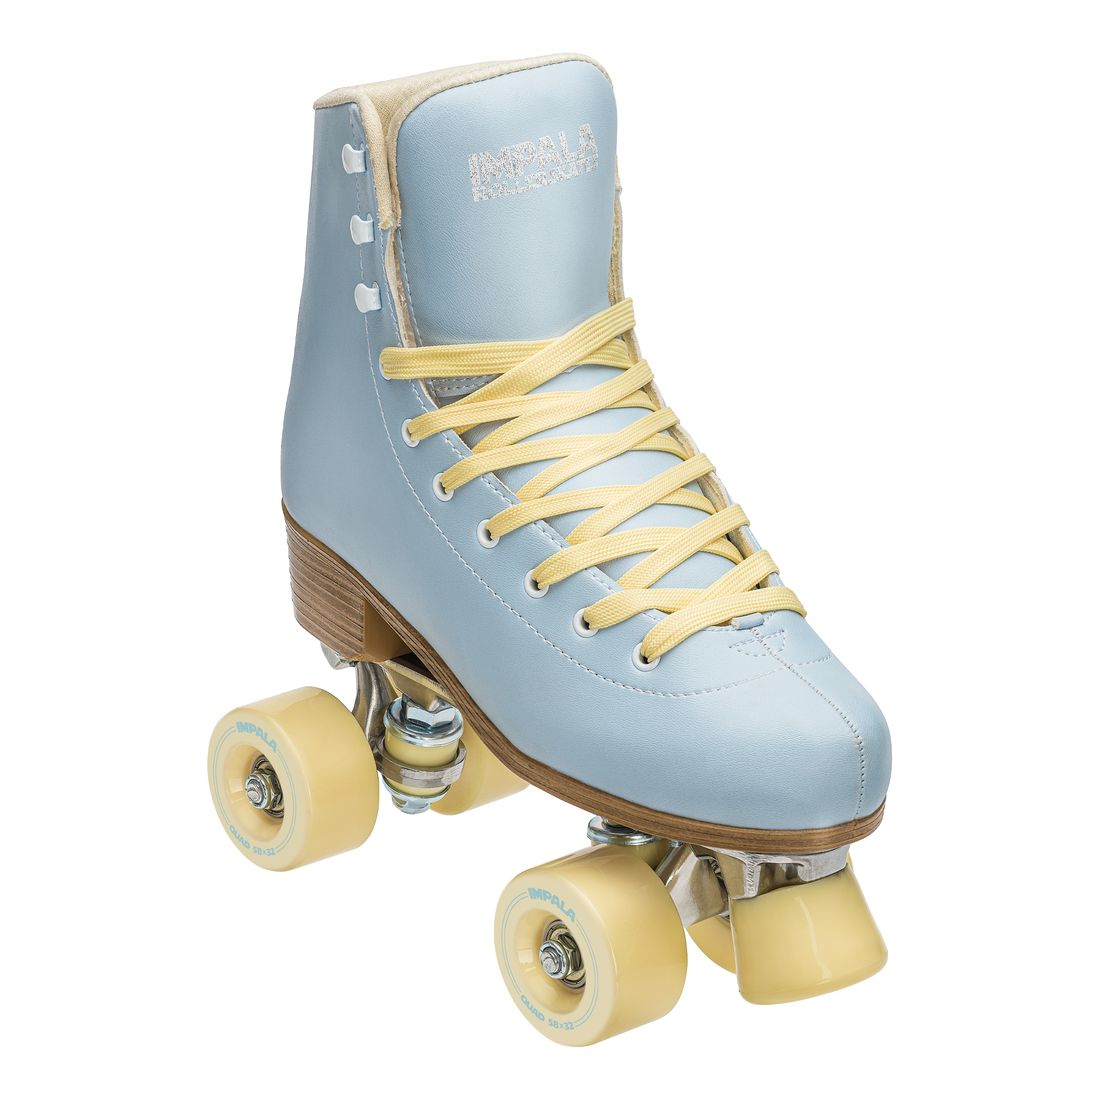 Impala Sky Blue/Yellow Quad Skates (Size 8 US)